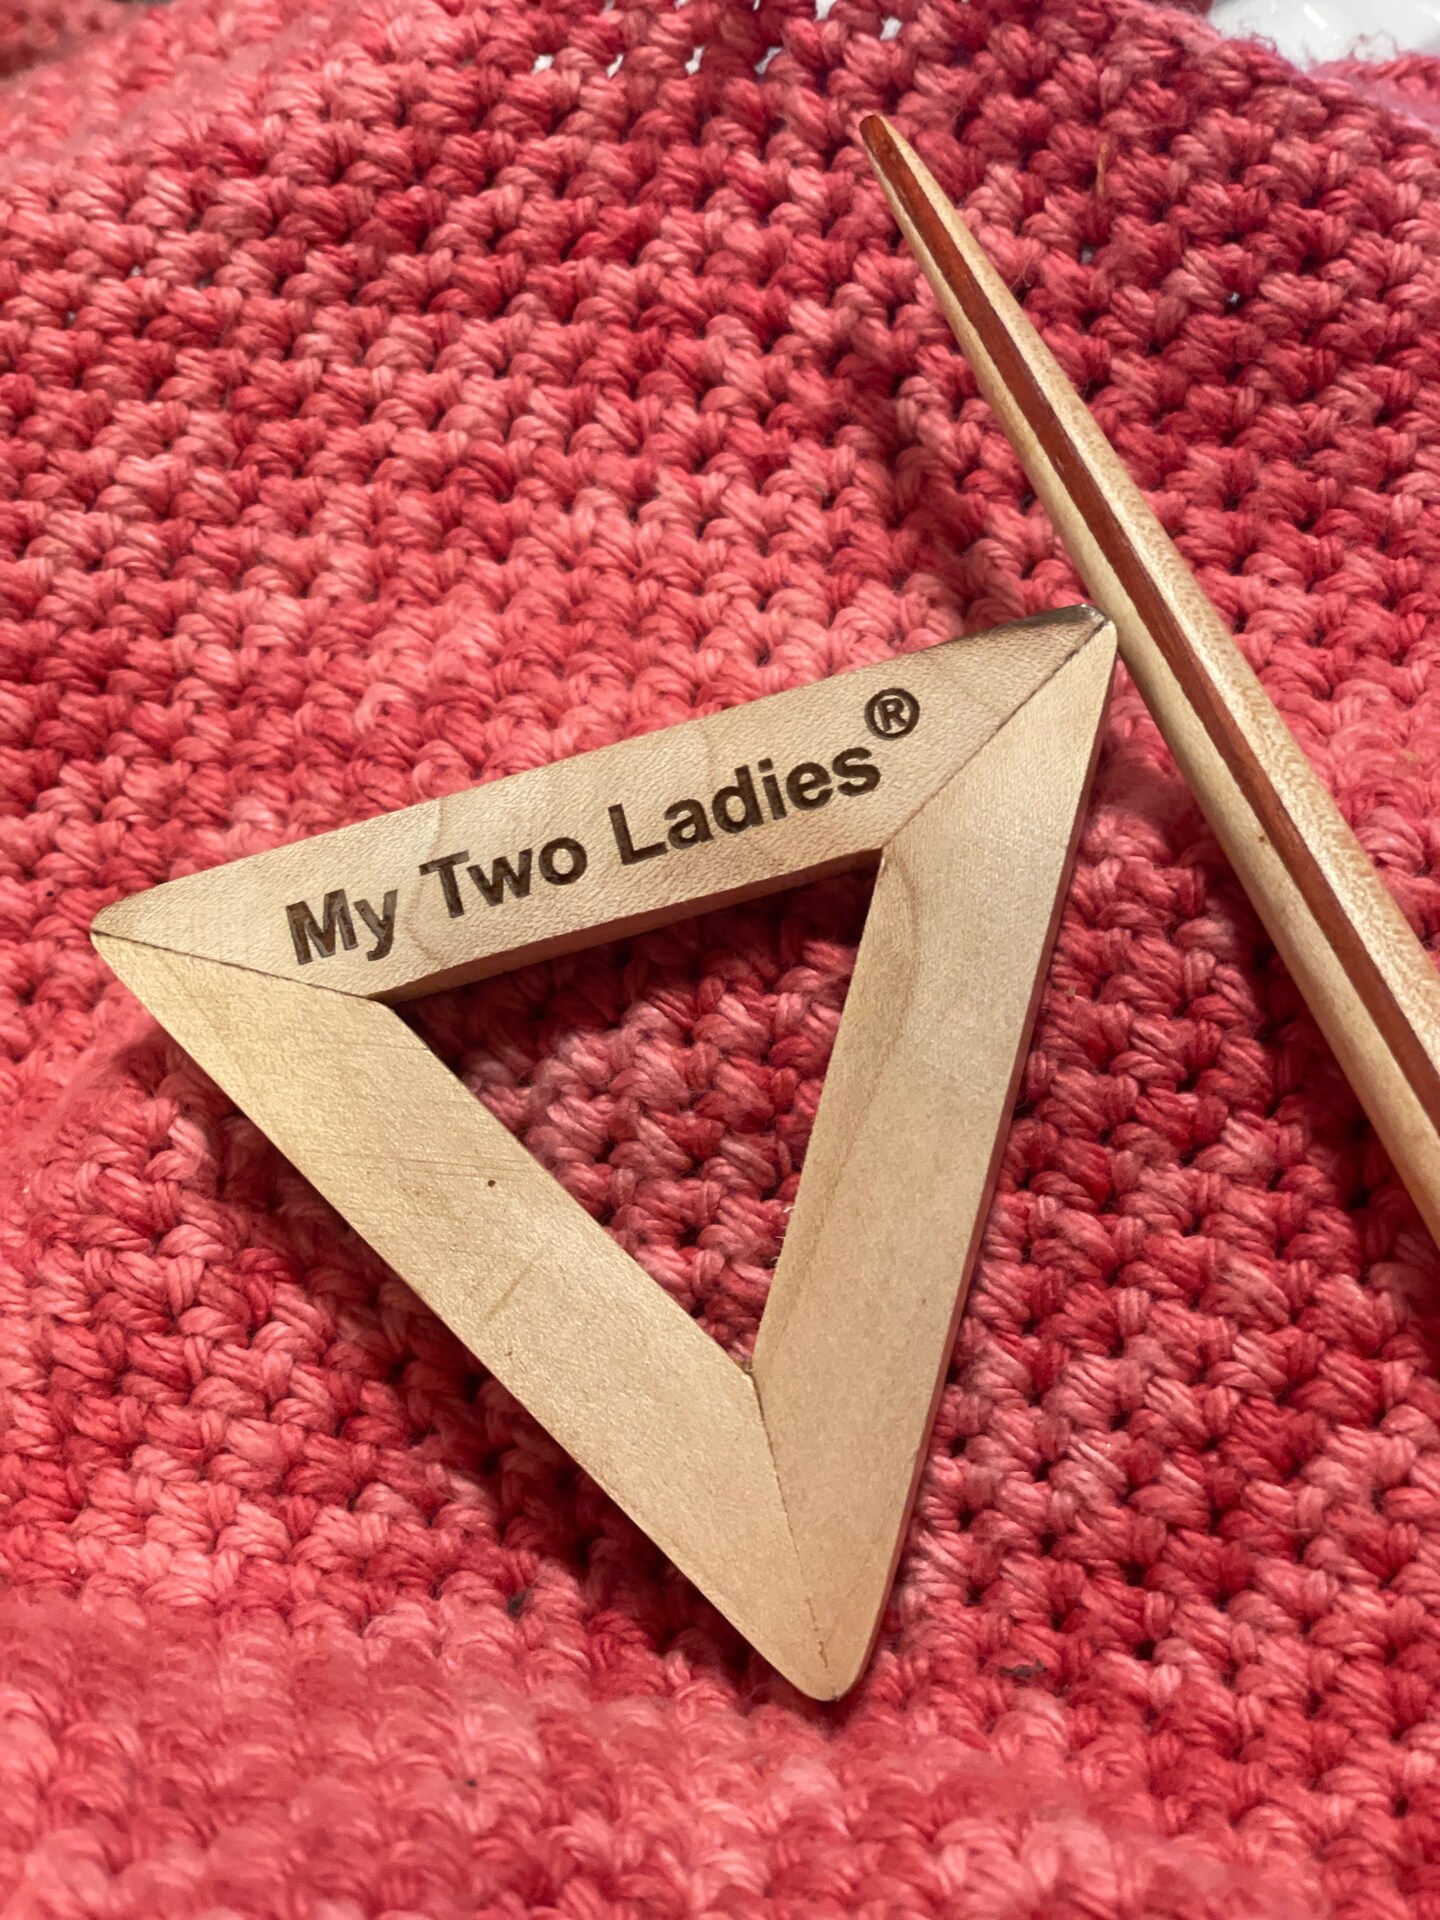 My Two Ladies Triangular Shawl Pin | w/Stick | Handcrafted